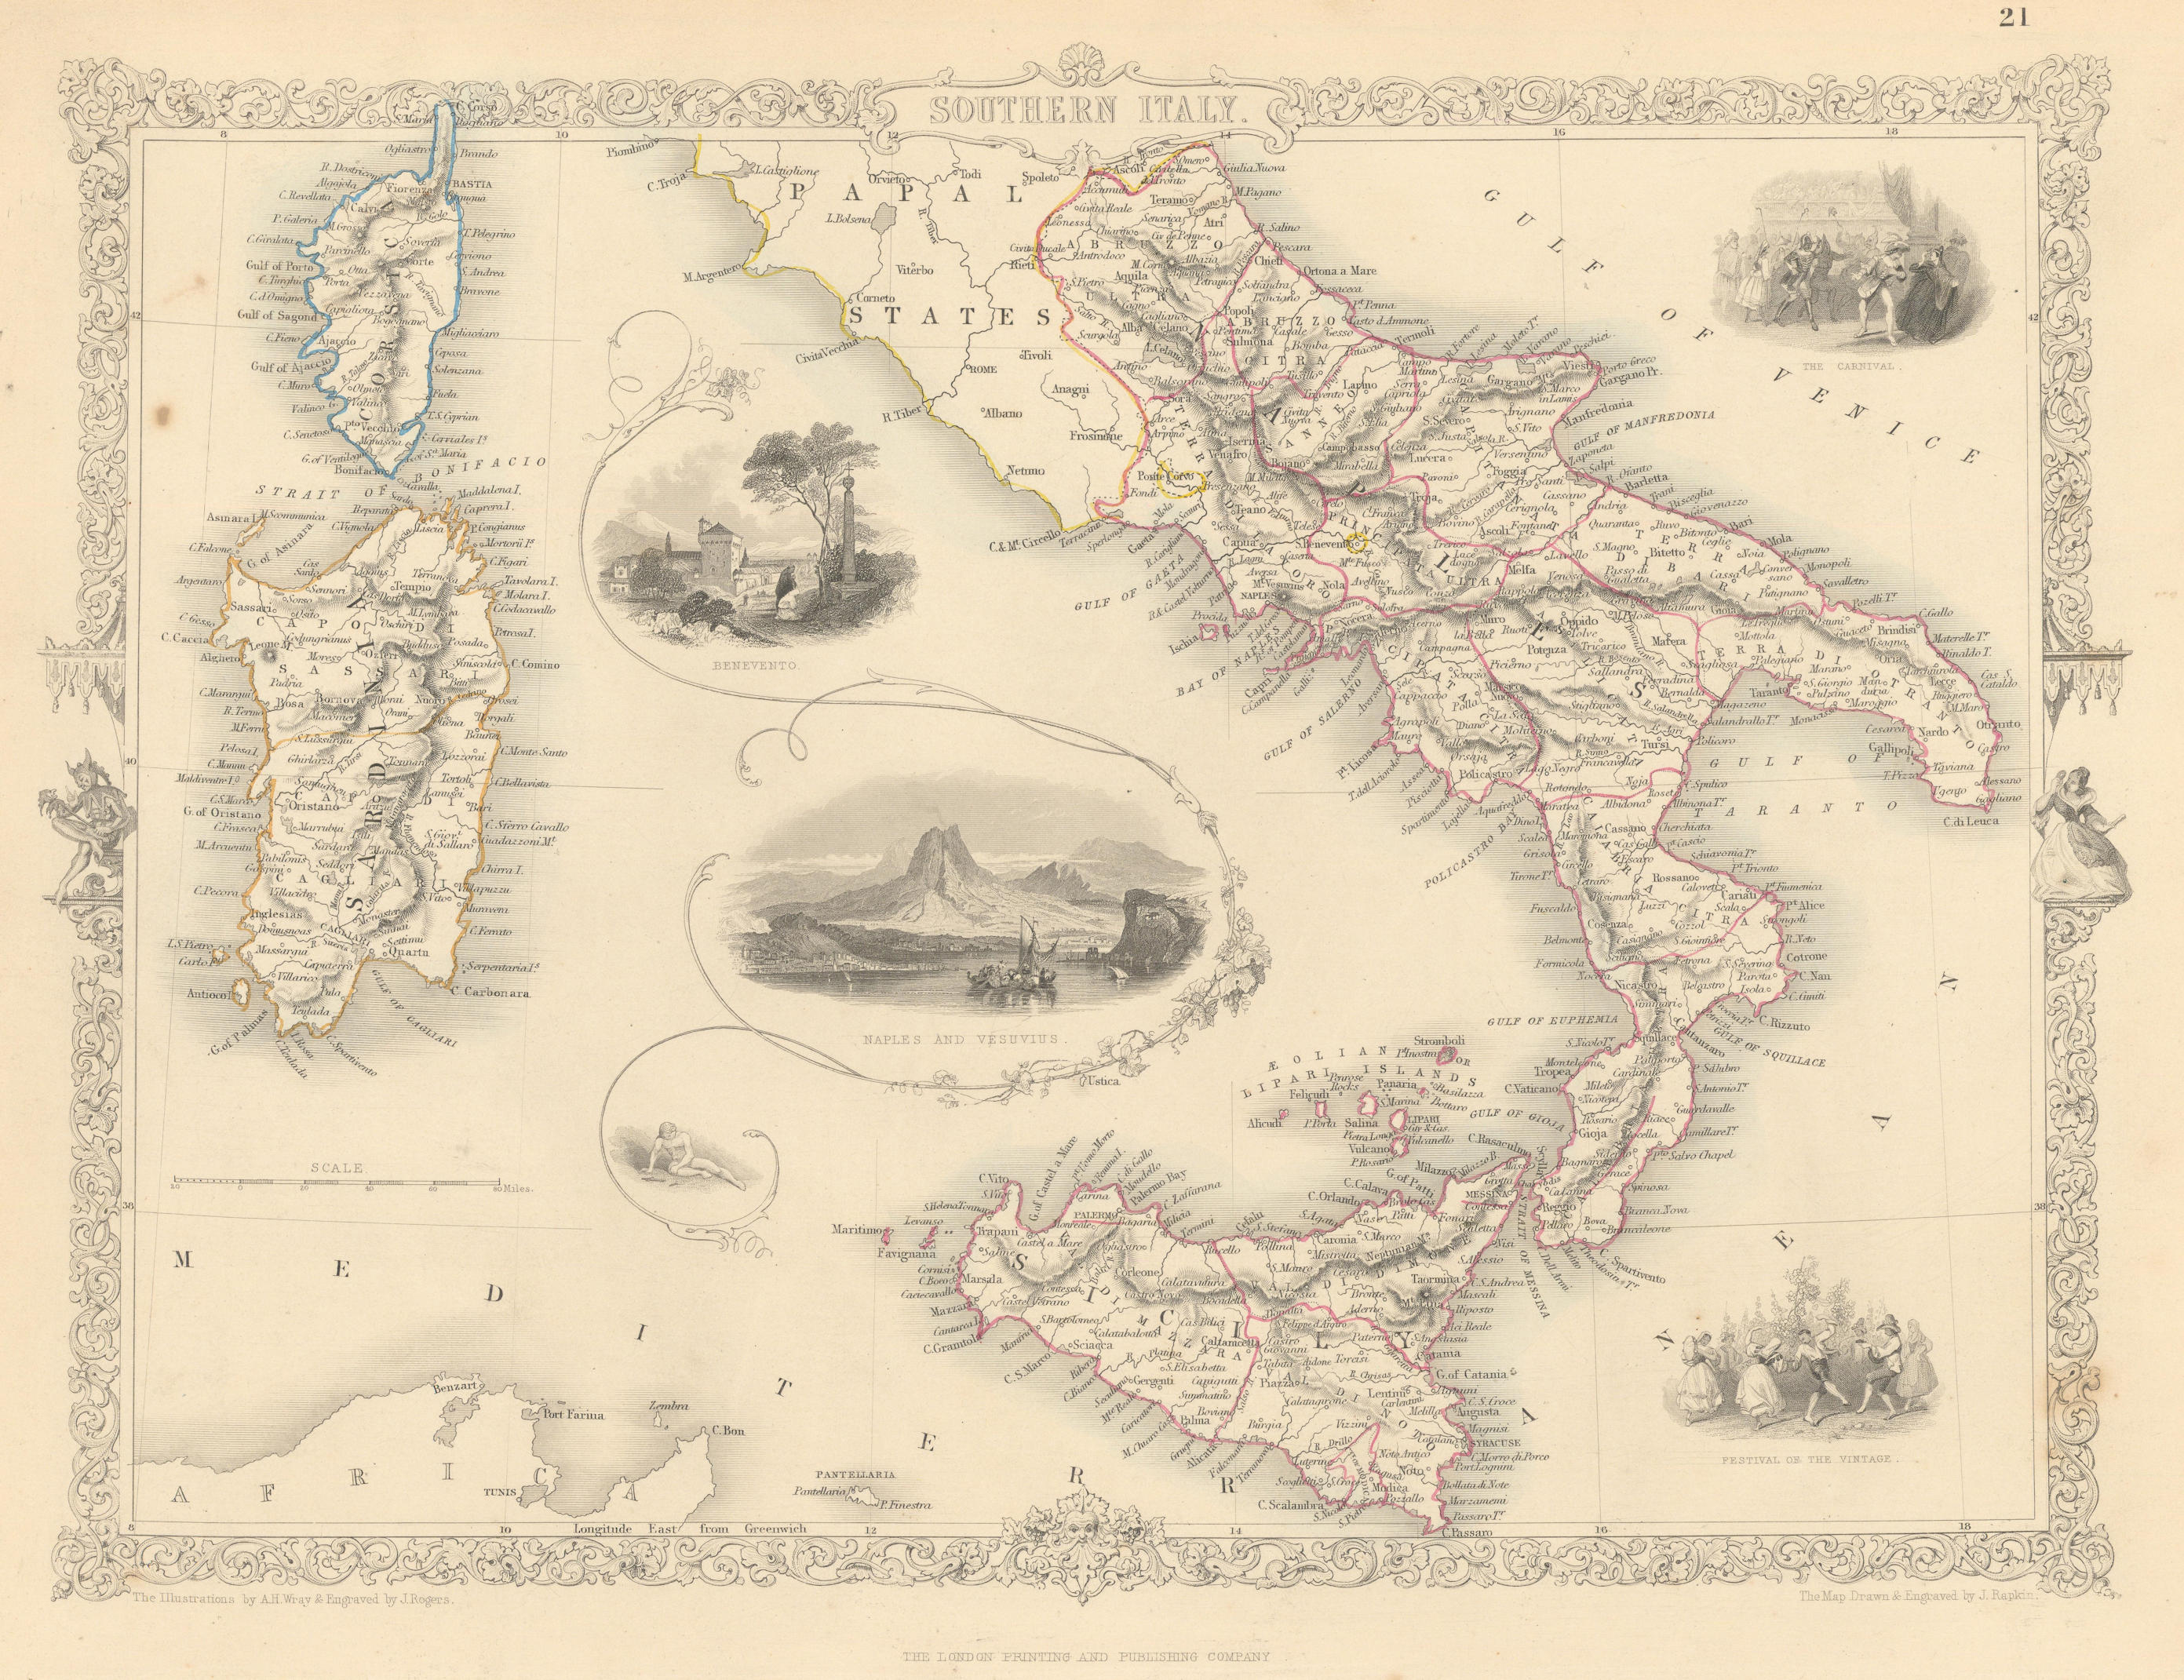 Associate Product SOUTHERN ITALY. Naples/Vesuvius. Sicily Sardinia Corsica. RAPKIN/TALLIS 1851 map